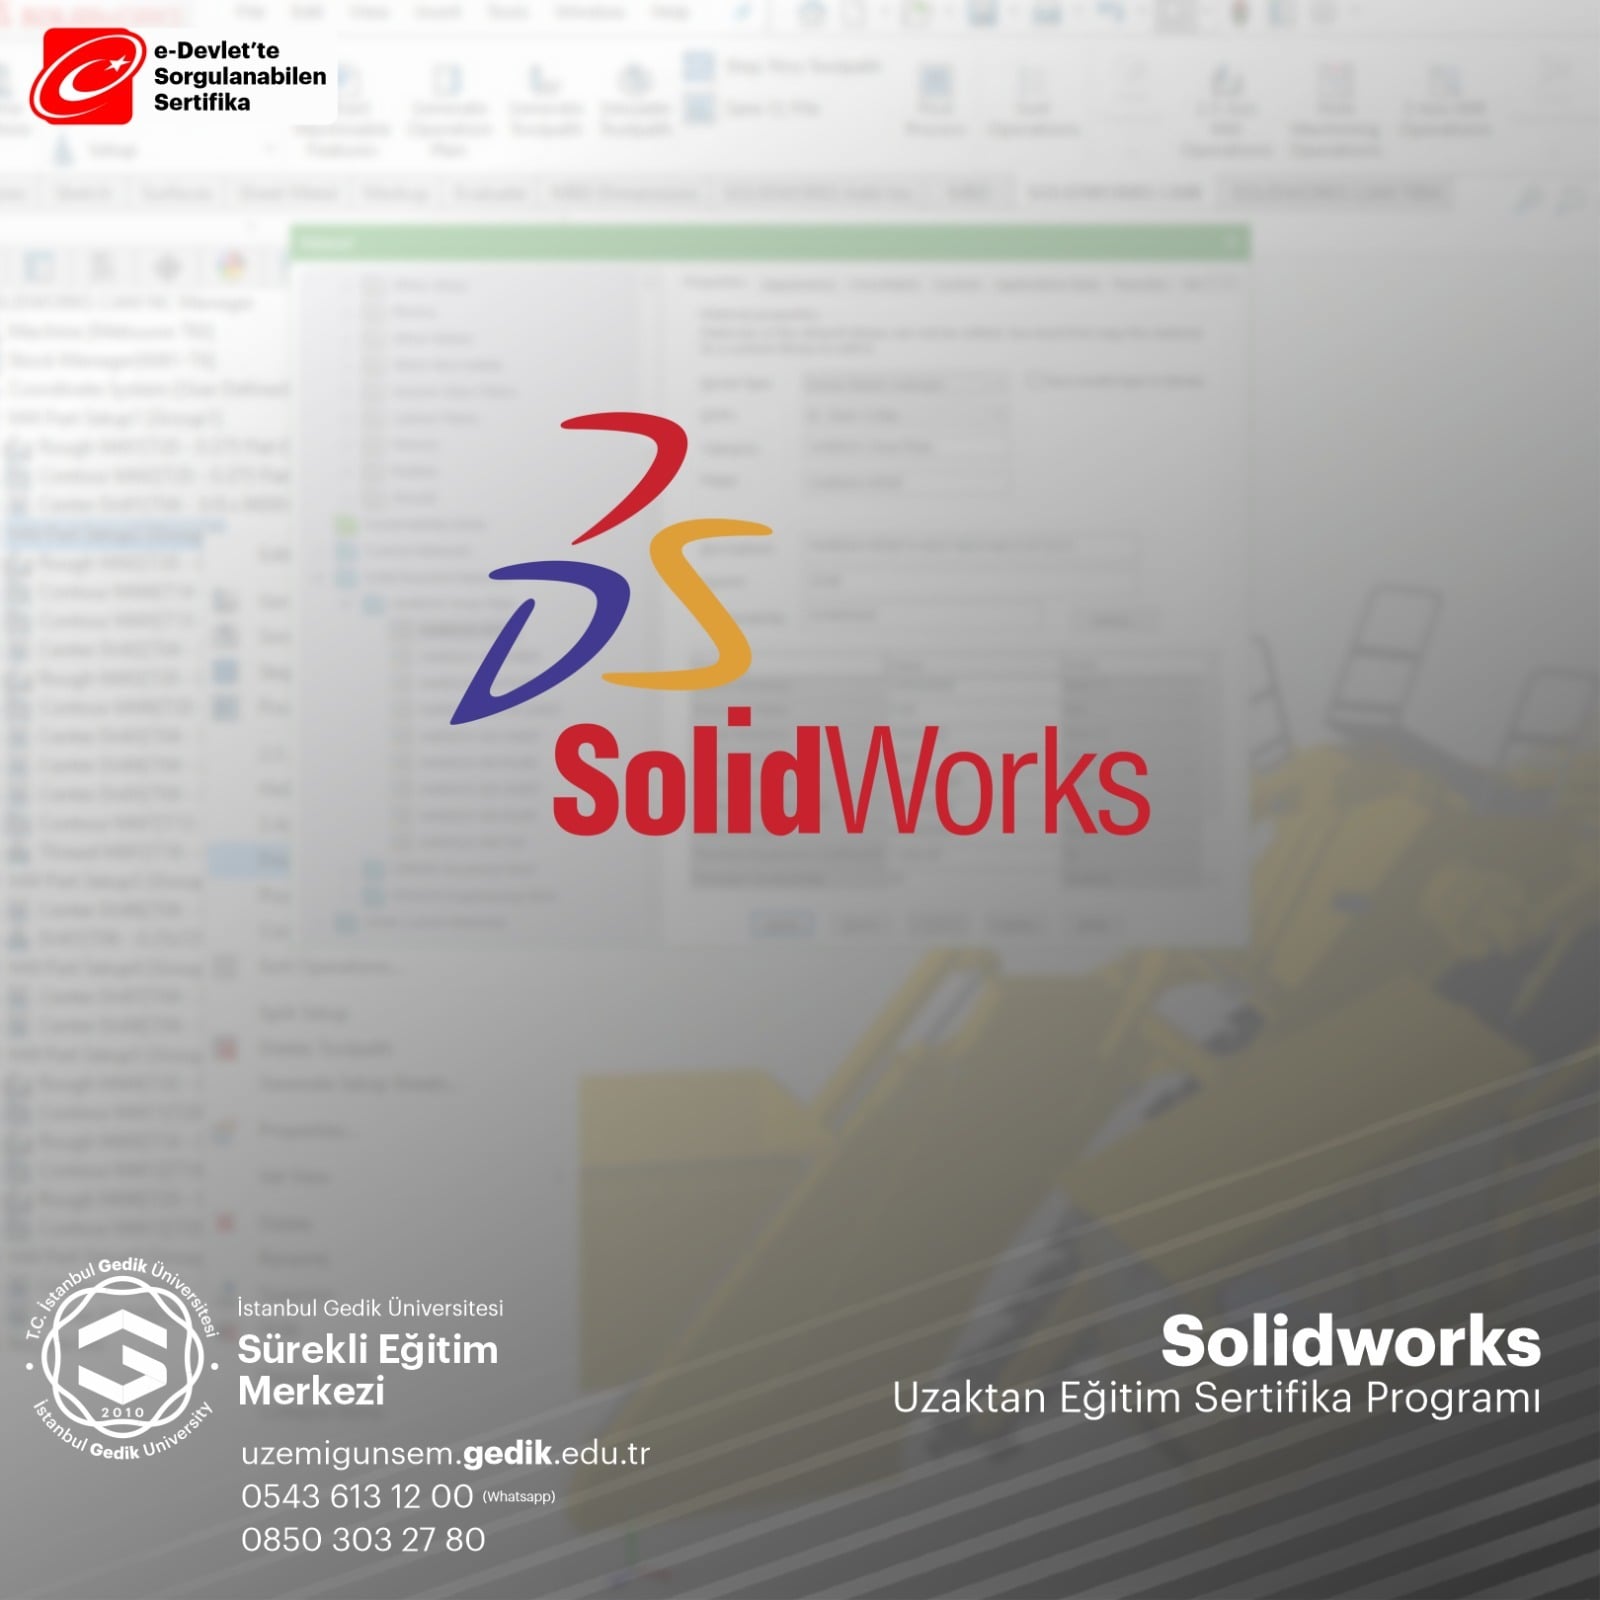 Solidworks Eğitimi Sertifika Programı